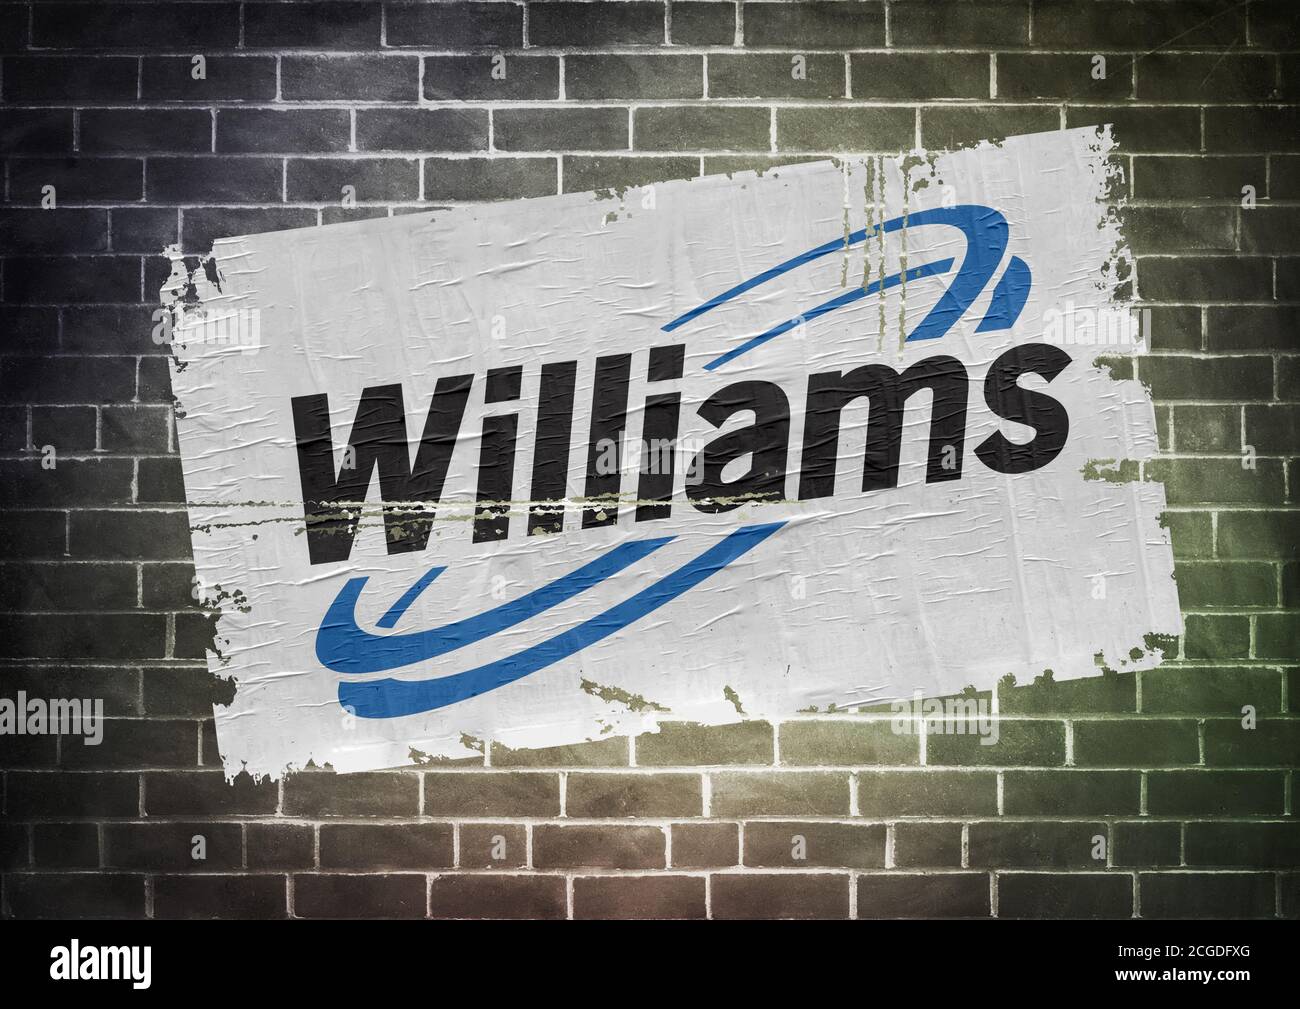 Williams fracking company Stock Photo